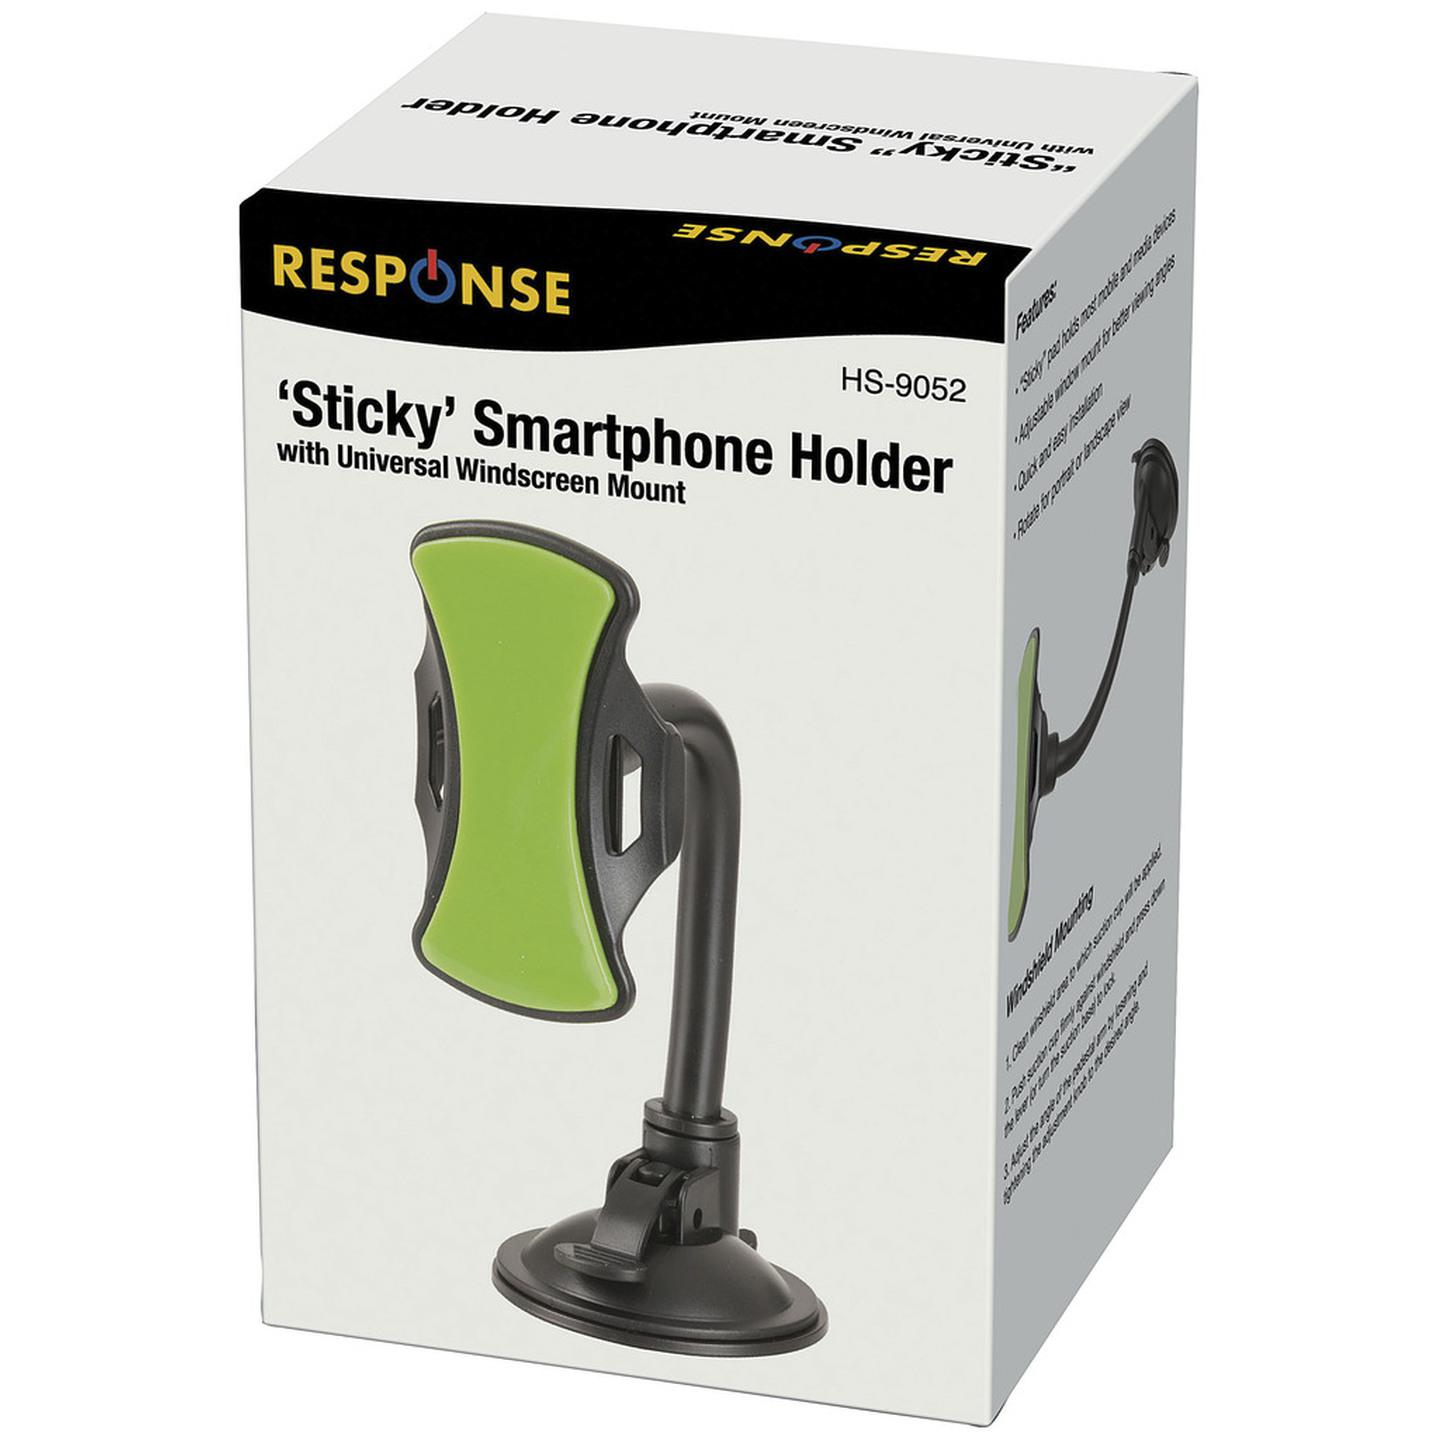 Universal Windscreen Sticky Smartphone Holder